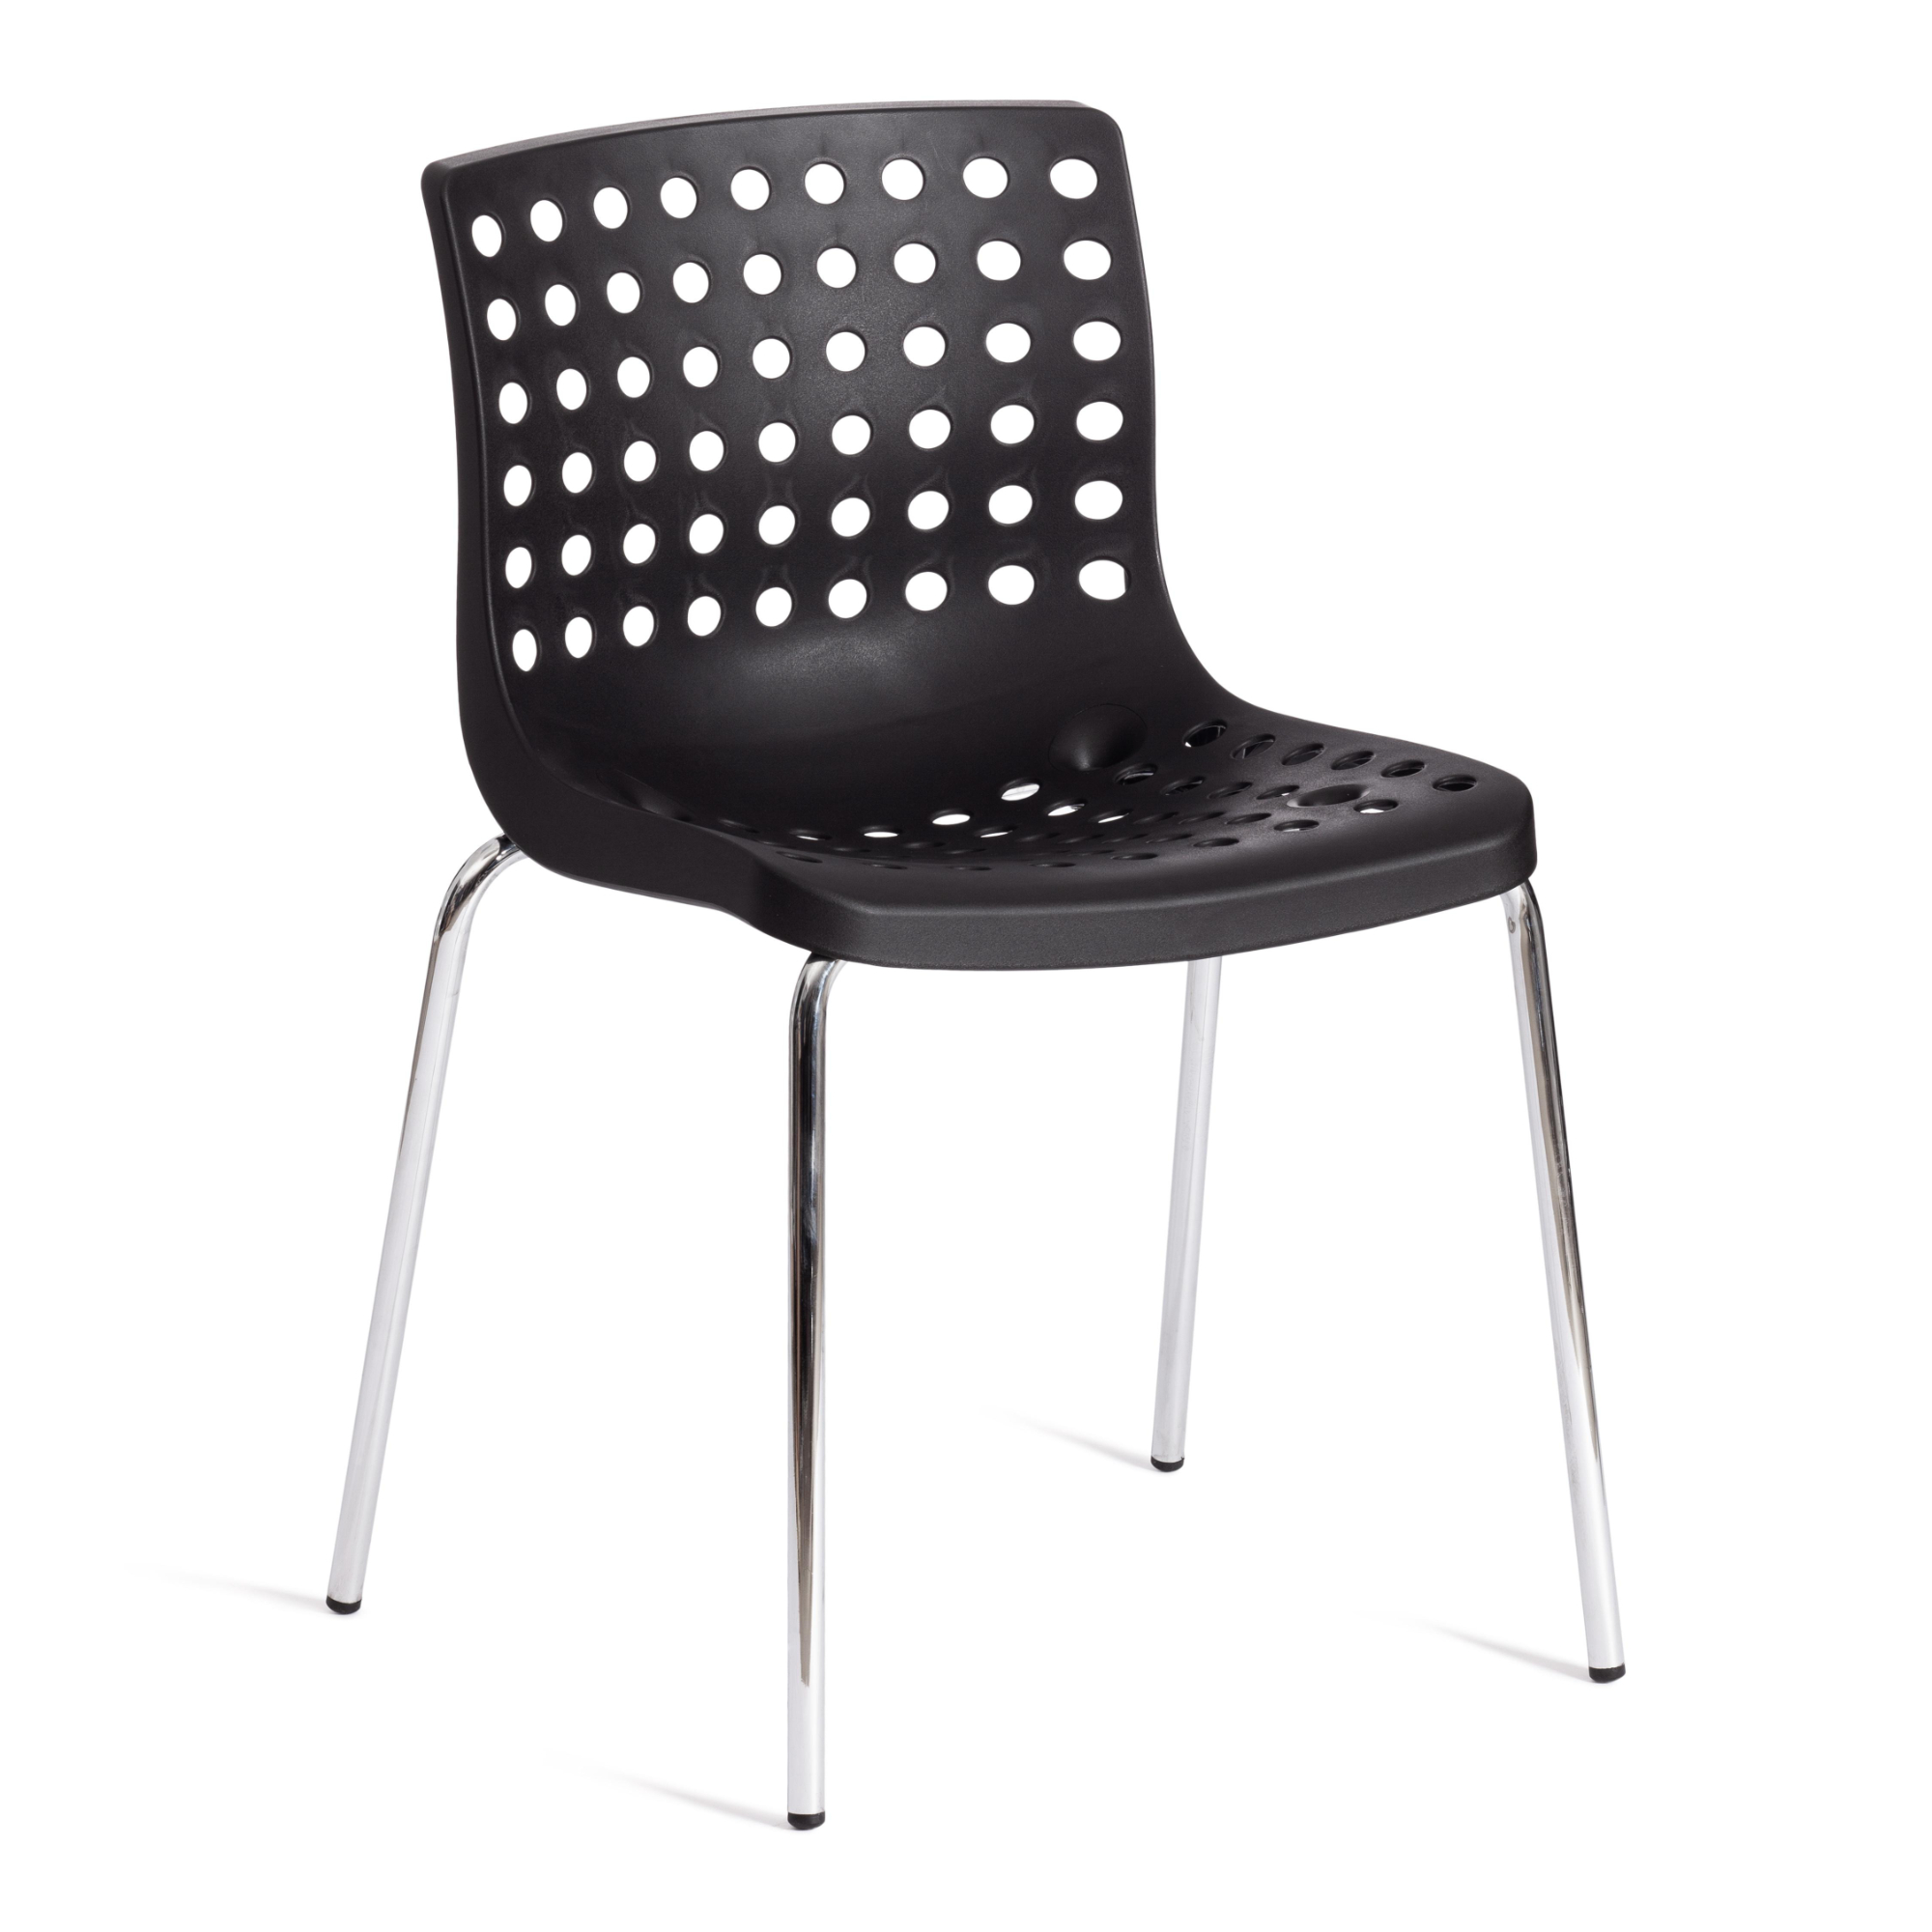 Стул ТС Skalberg пластиковый черный с хромированными ножками 46х56х79 см стул тс cindy chair пластиковый с ножками из бука бежевый 45х51х82 см